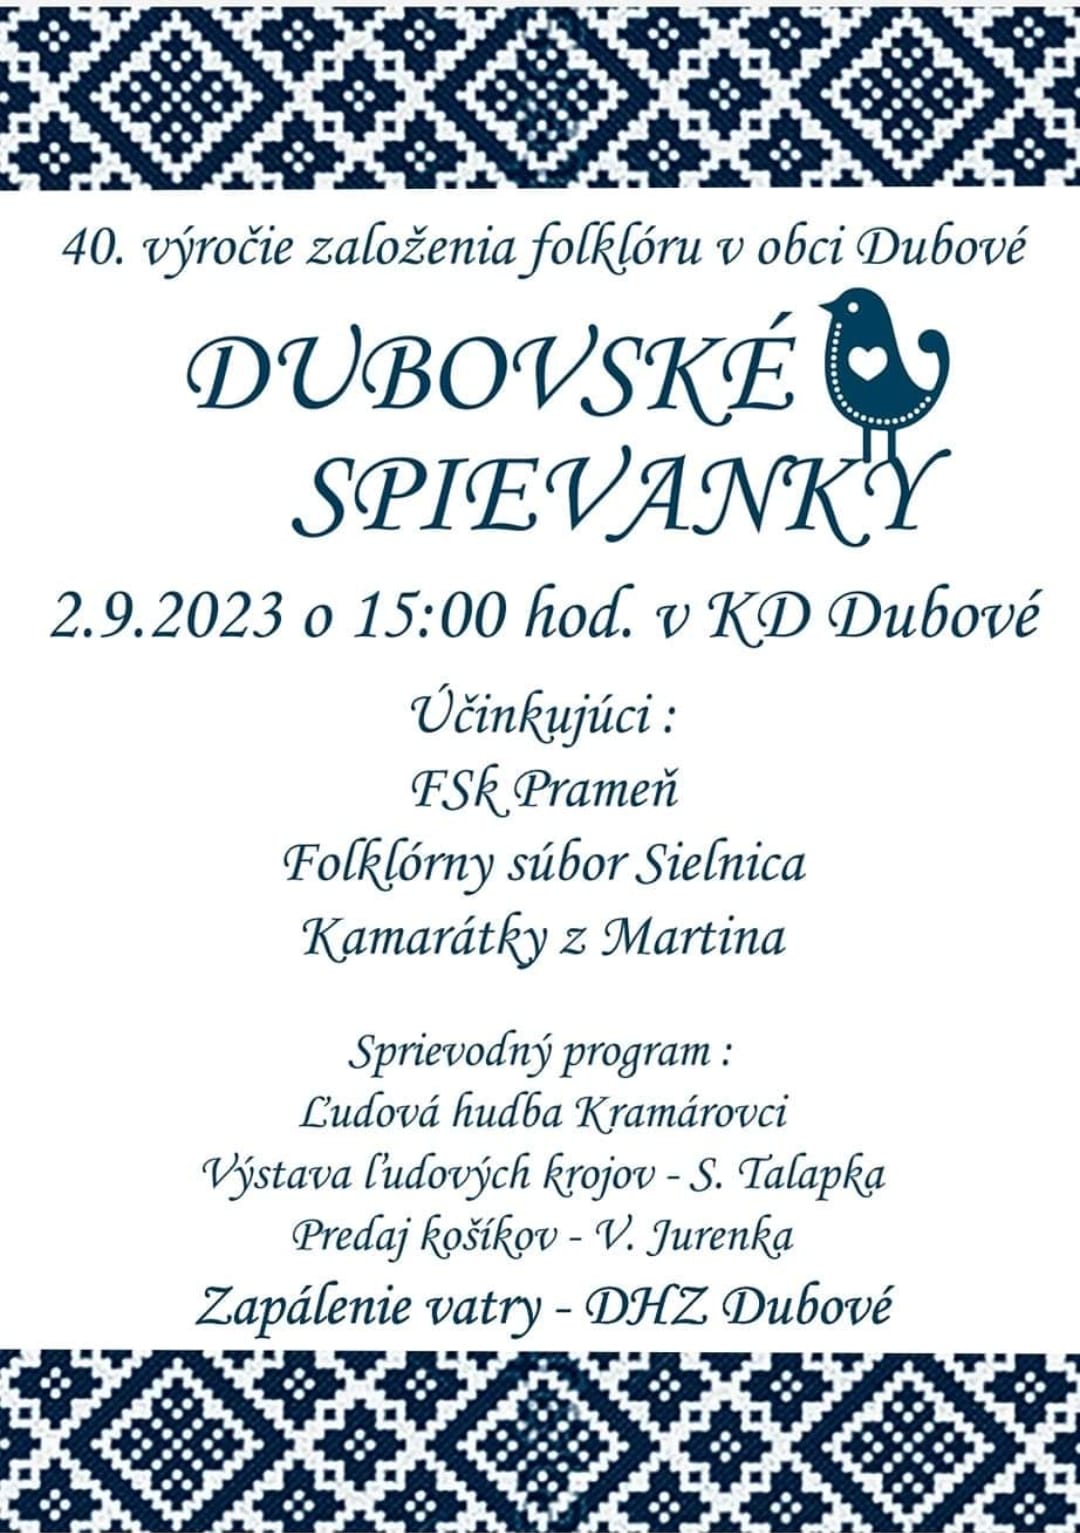 Dubovsk spievanky 2023 Dubov - 40. vroie zaloenia folklru v obci